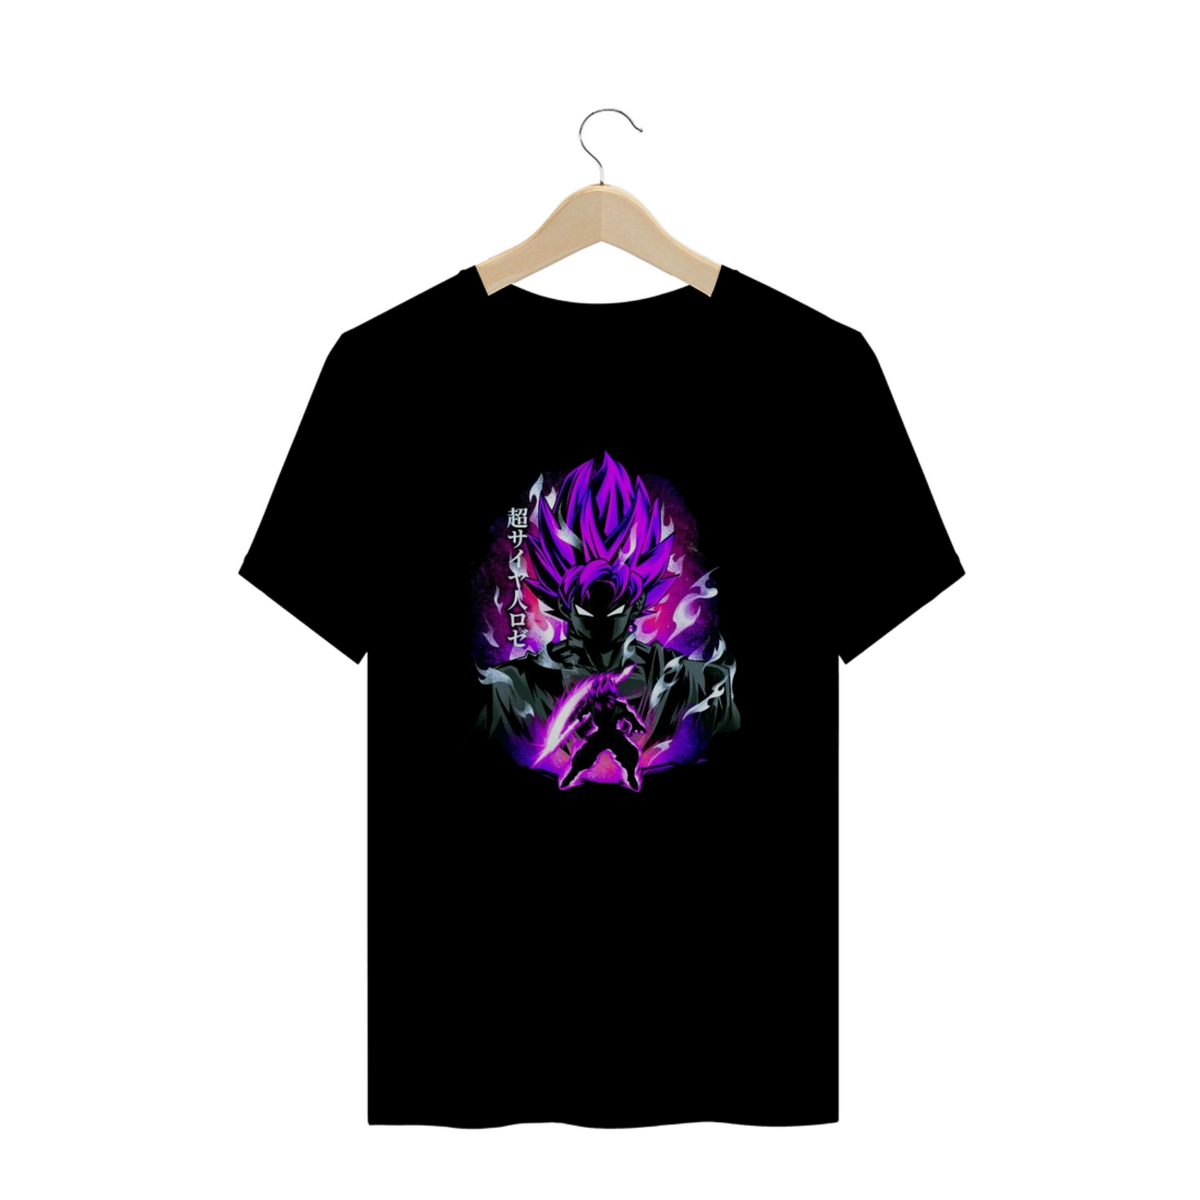 Nome do produto: Camisa T-shirt Plus Size - Goku Black ( Dragon Ball Z)